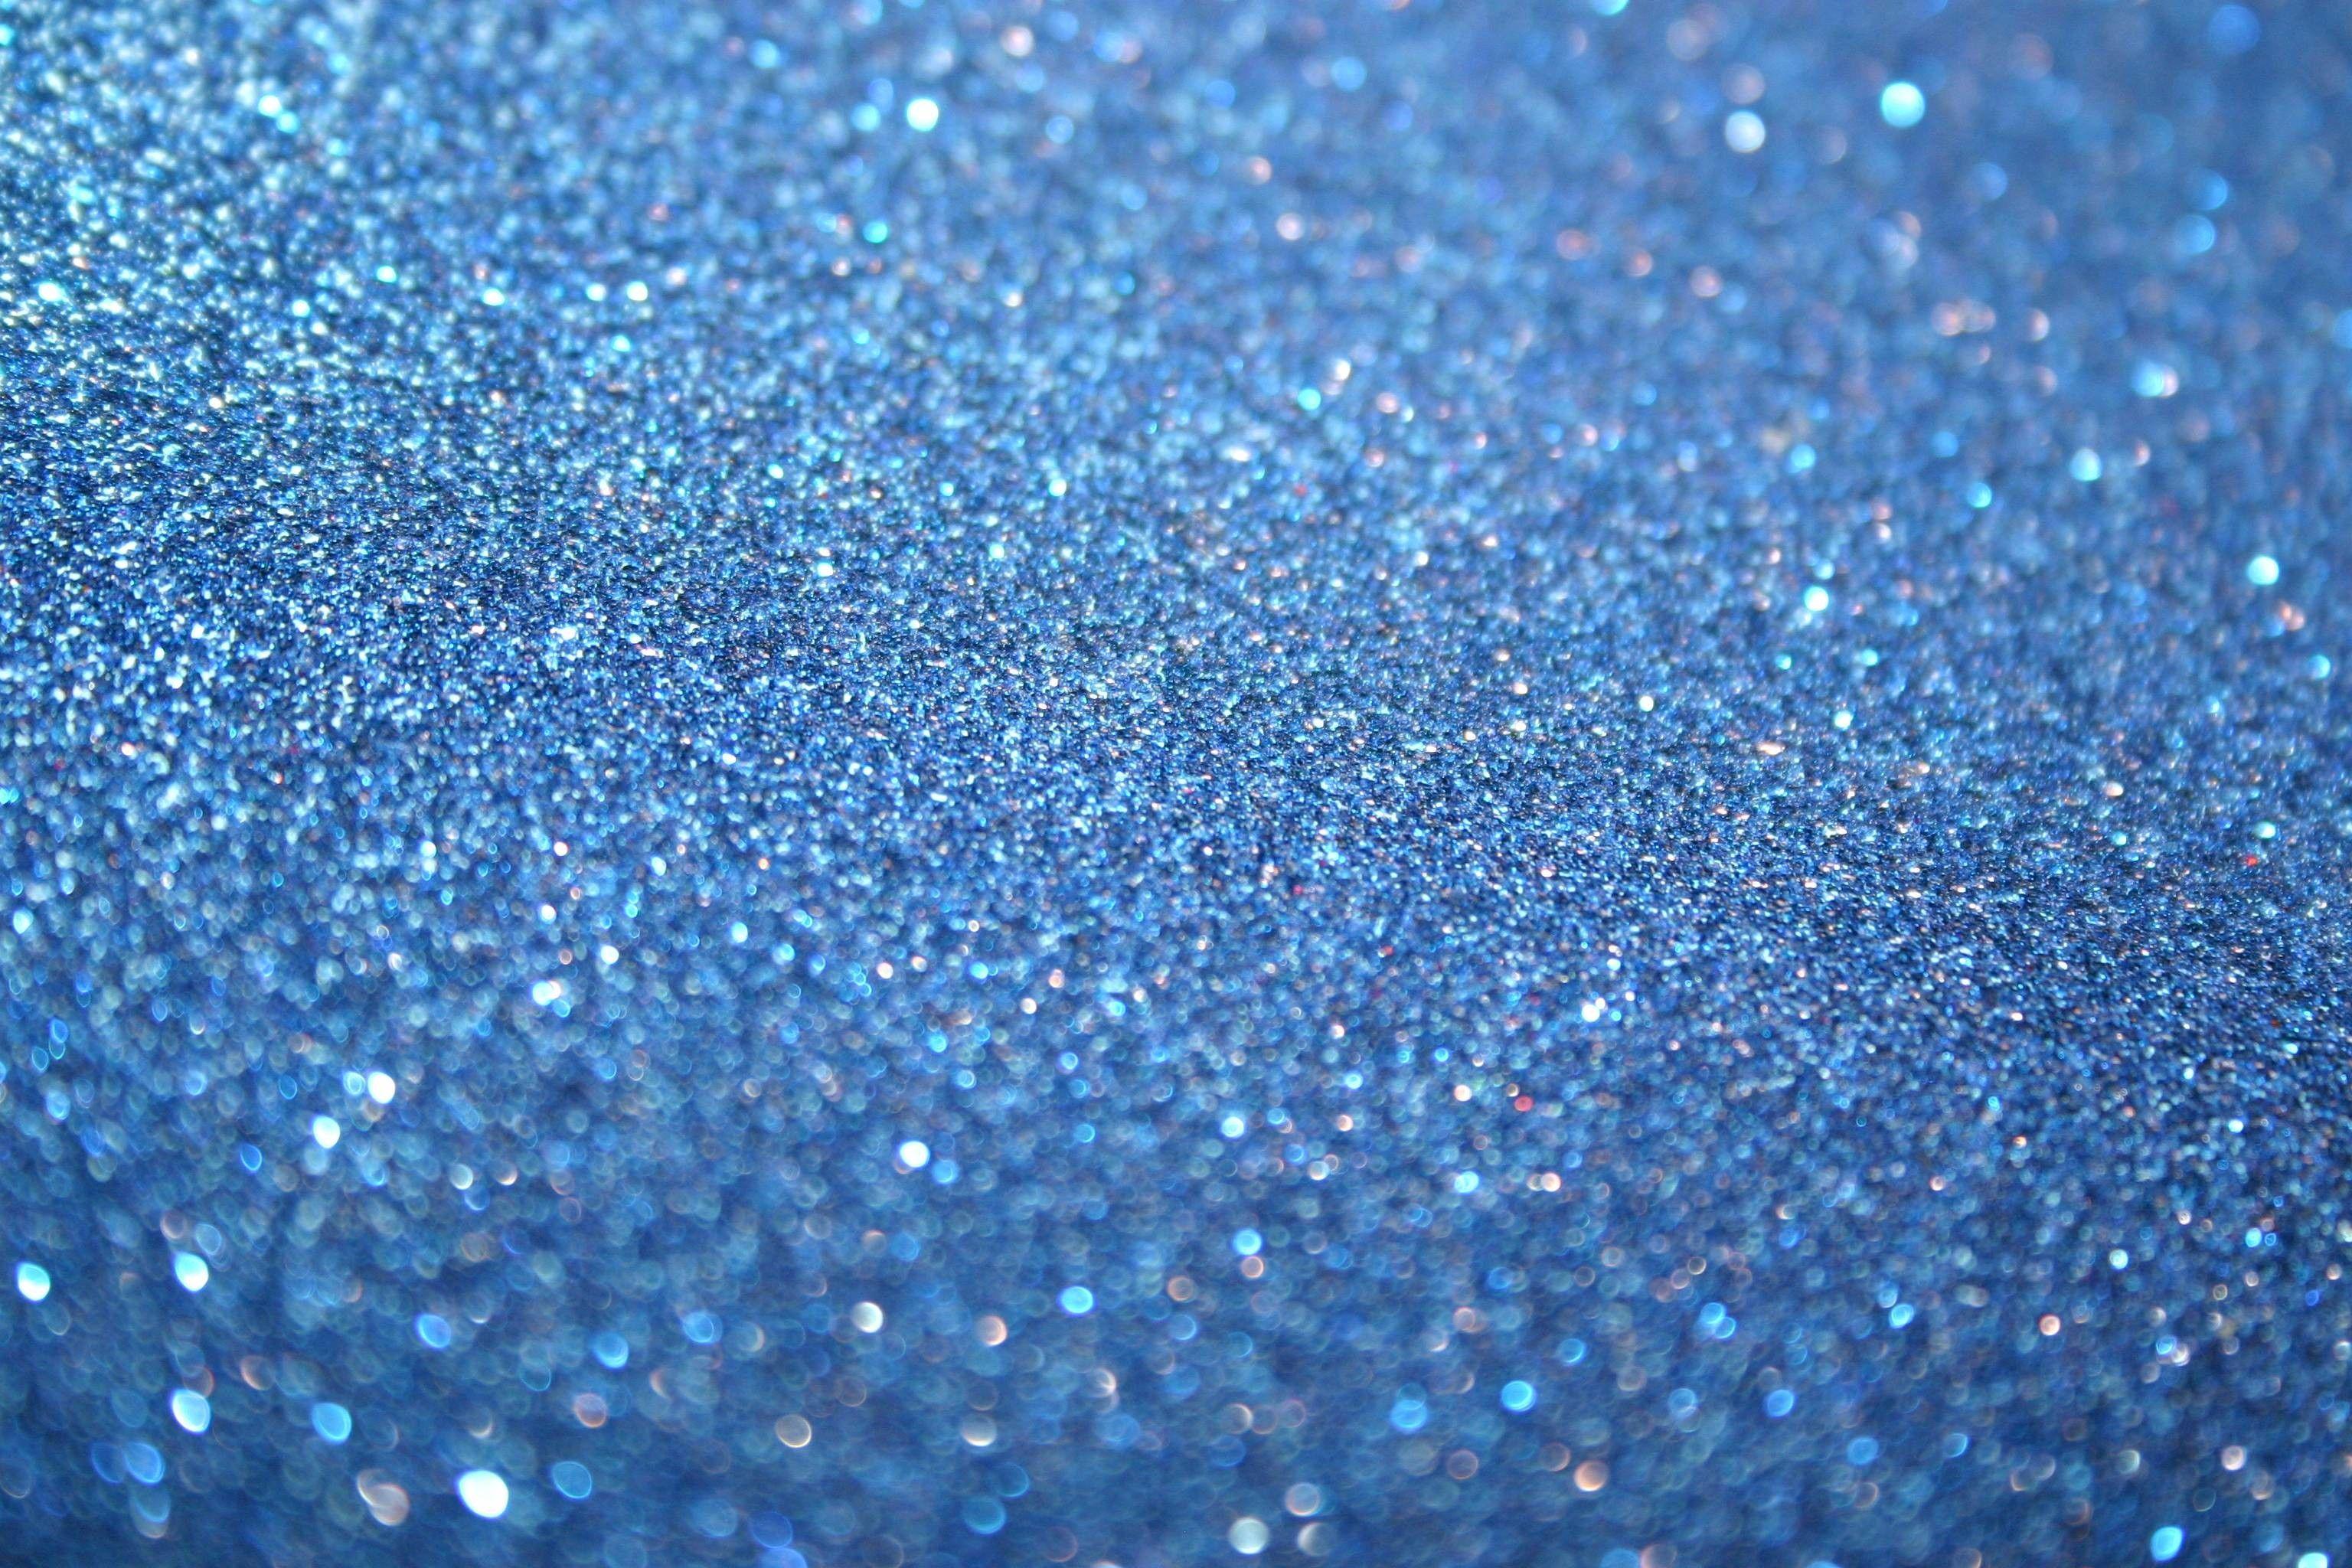 3. Light Blue Glitter Coffin Nails - wide 5